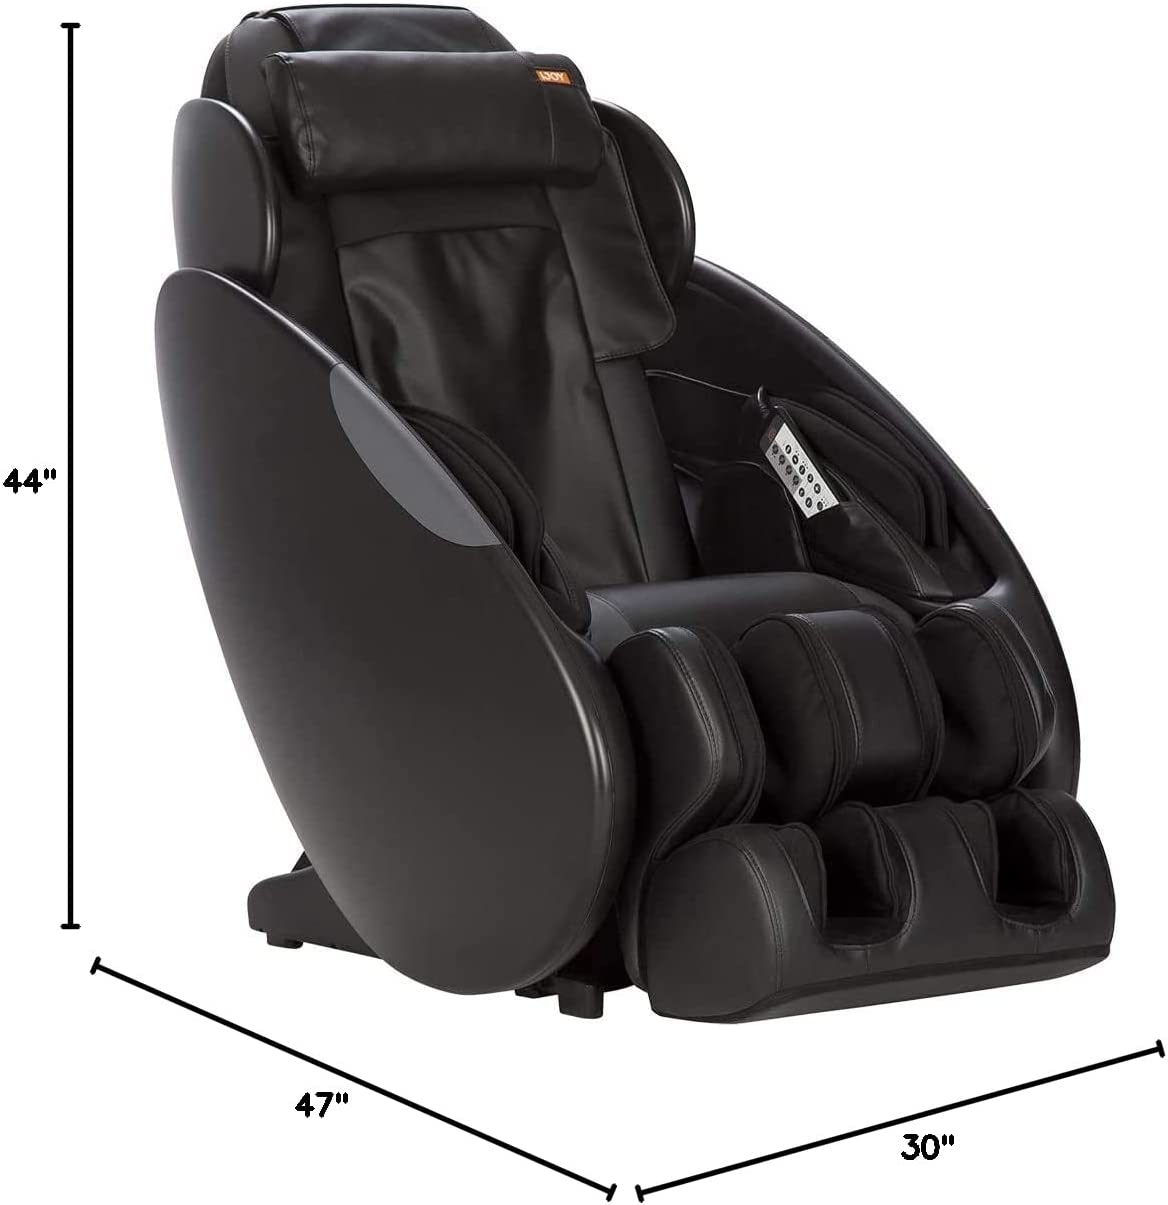 Human Touch iJOY Total Massage FlexGlide Full Body Massage Recliner Chair, Black - $645